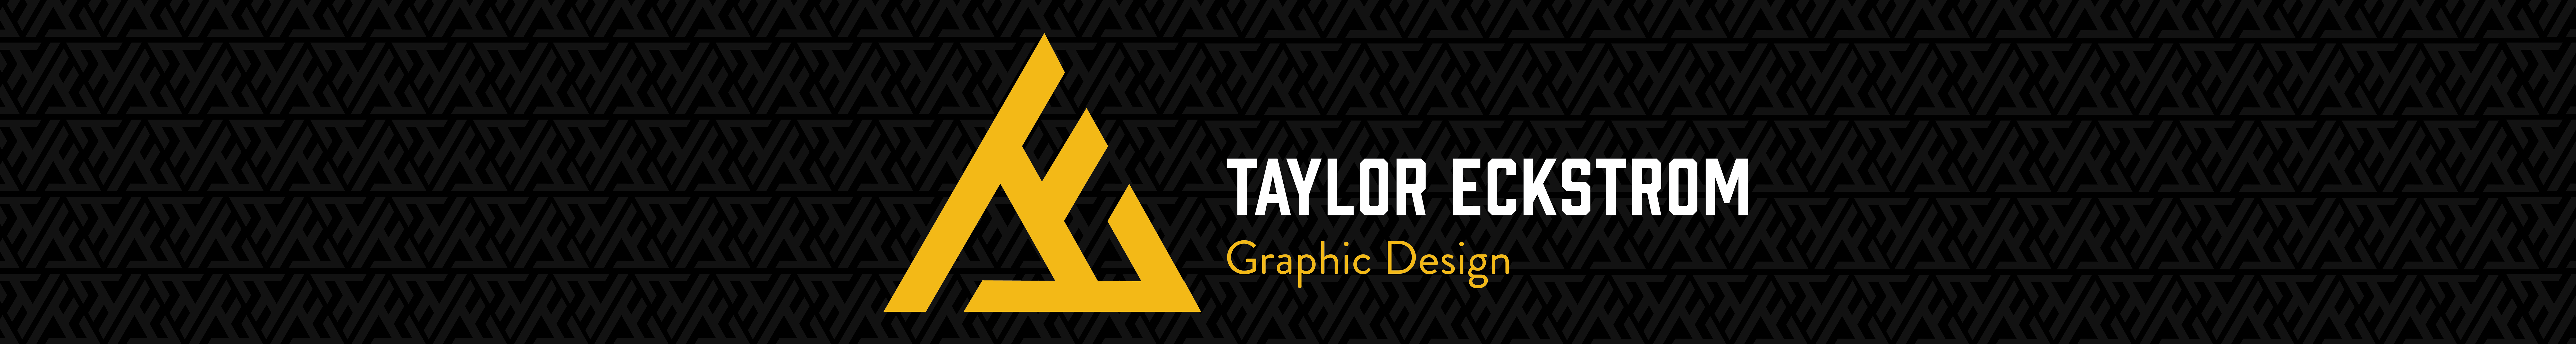 Taylor Eckstrom's profile banner